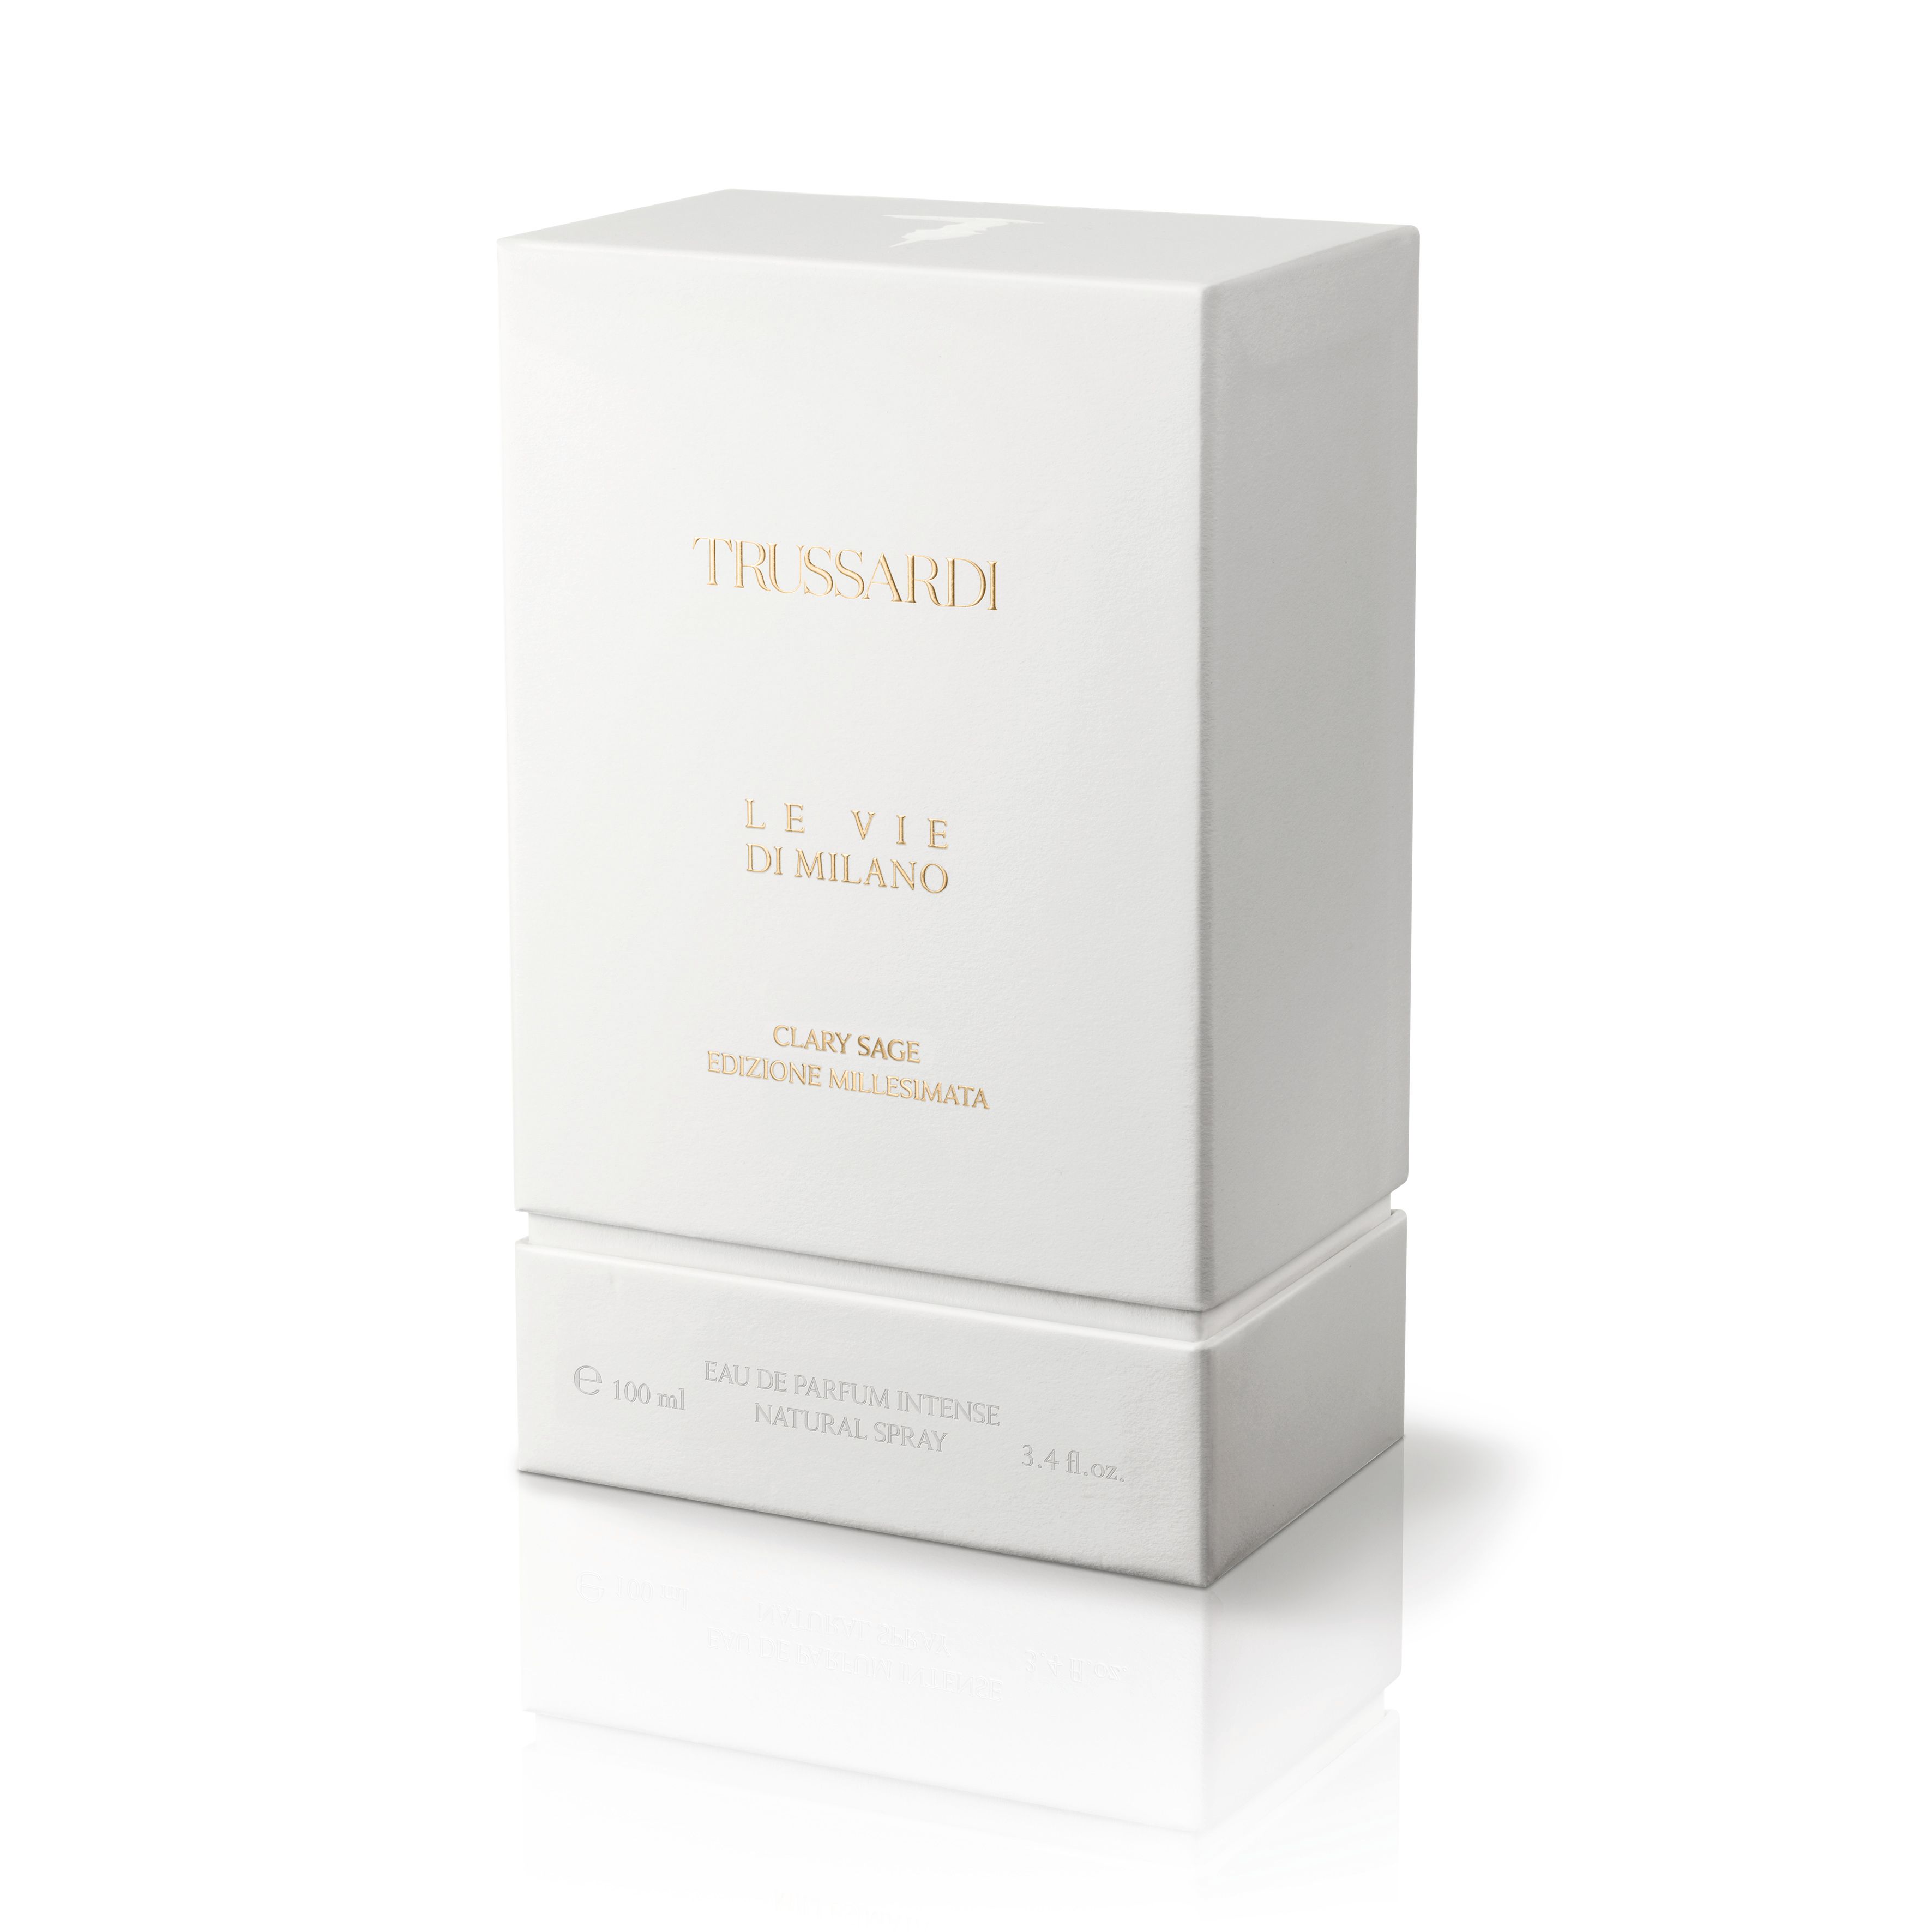 Clary Sage Edizione Millesimata Trussardi perfume - a new fragrance for ...